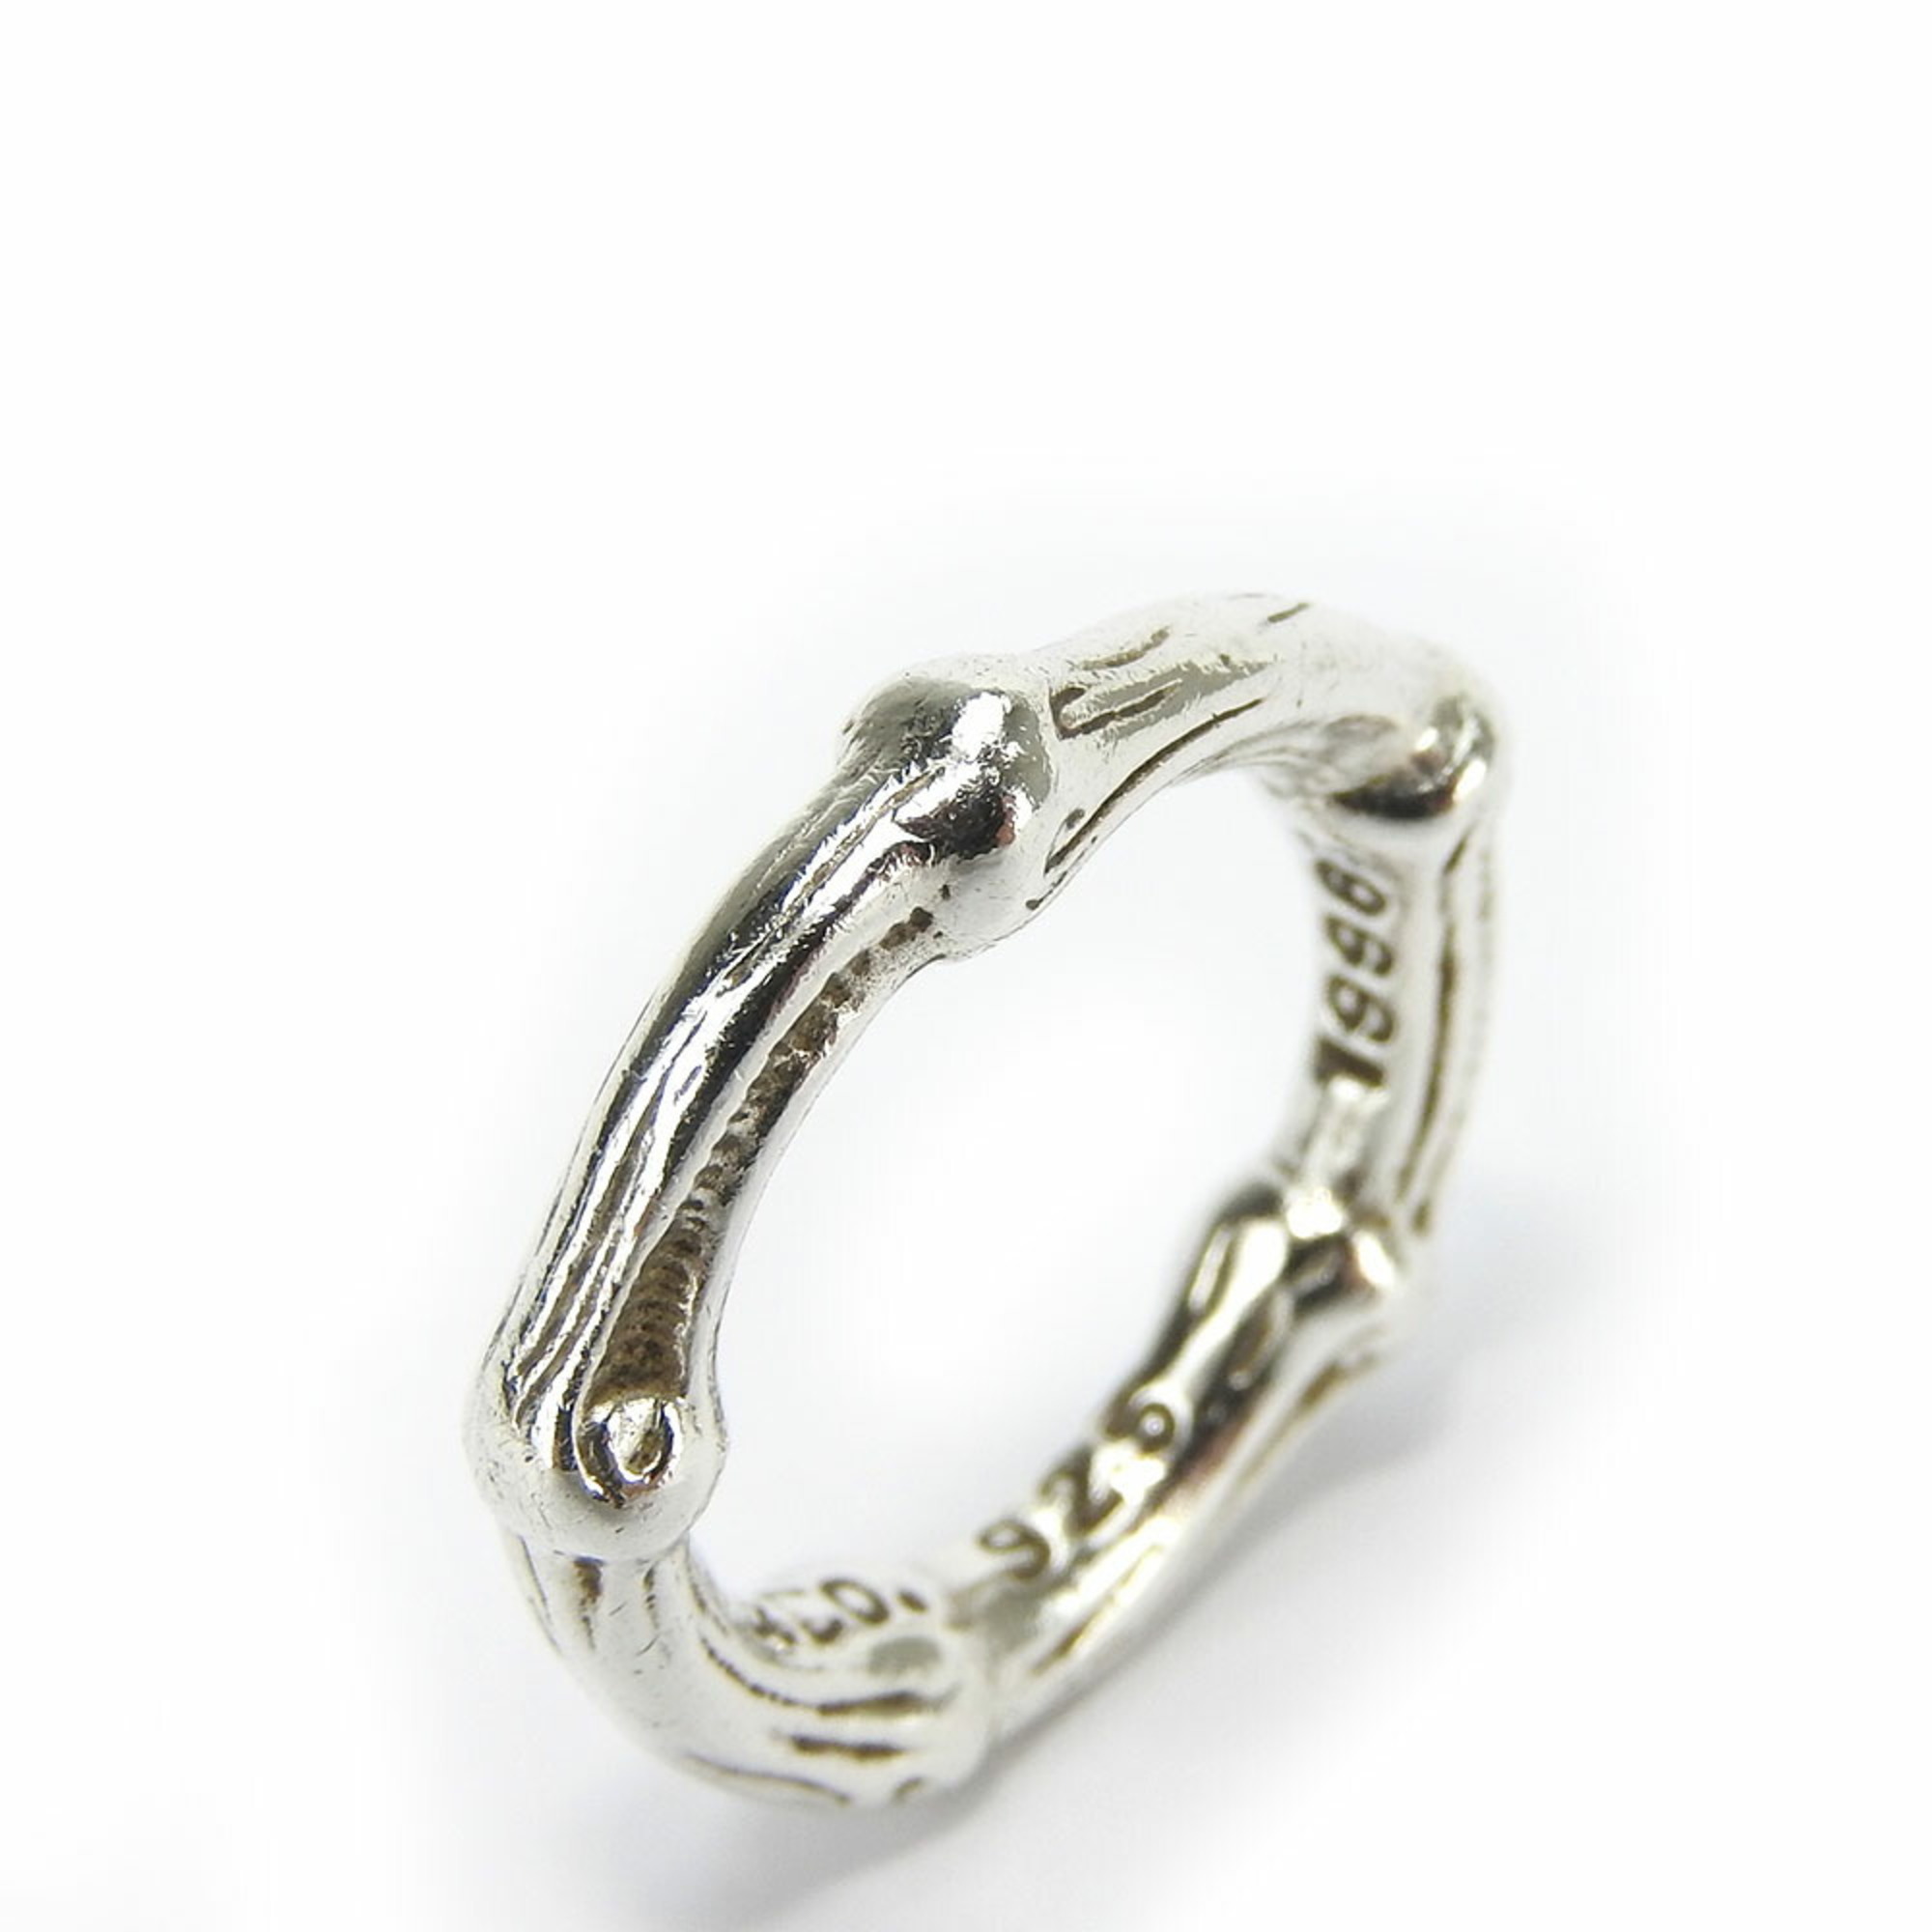 Tiffany & Co. Bamboo Ring, 925 Silver, Approx. 4.5g, Women's, TIFFANY